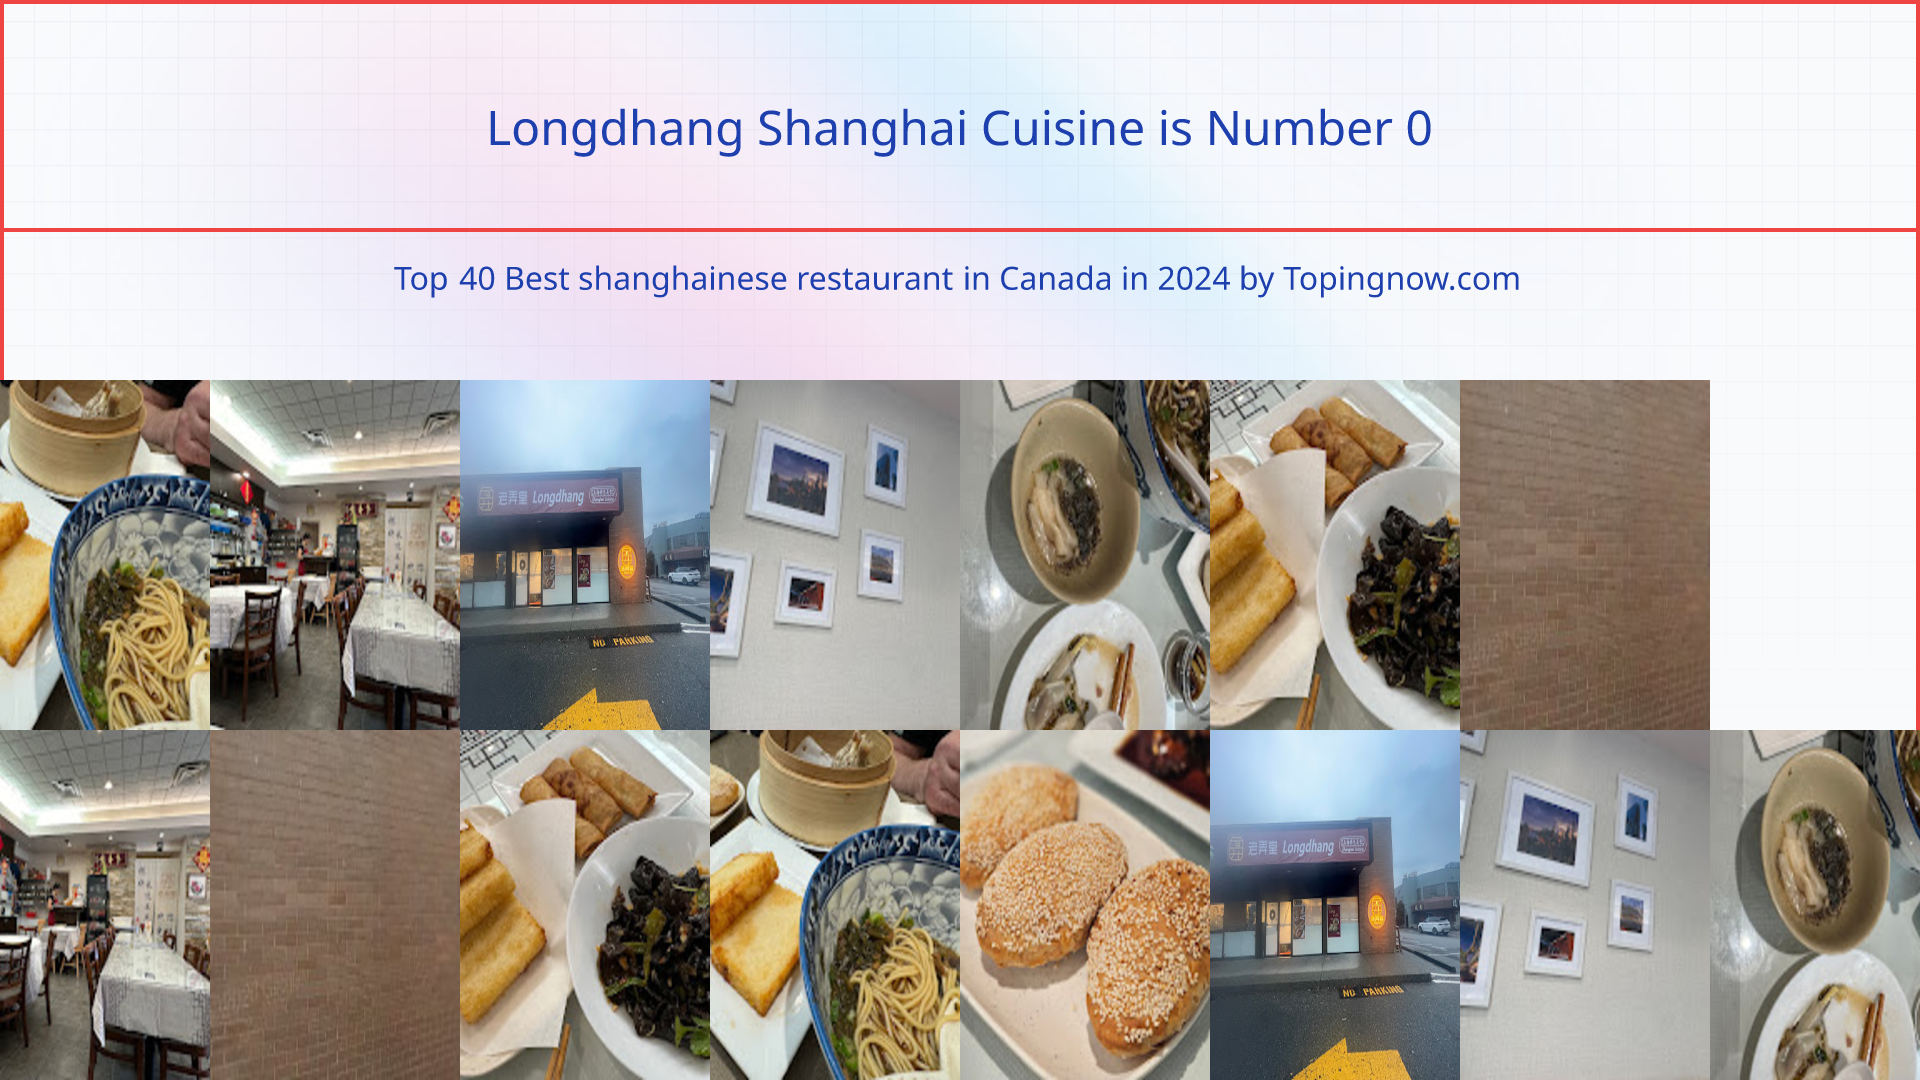 Longdhang Shanghai Cuisine: Top 40 Best shanghainese restaurant in Canada in 2024